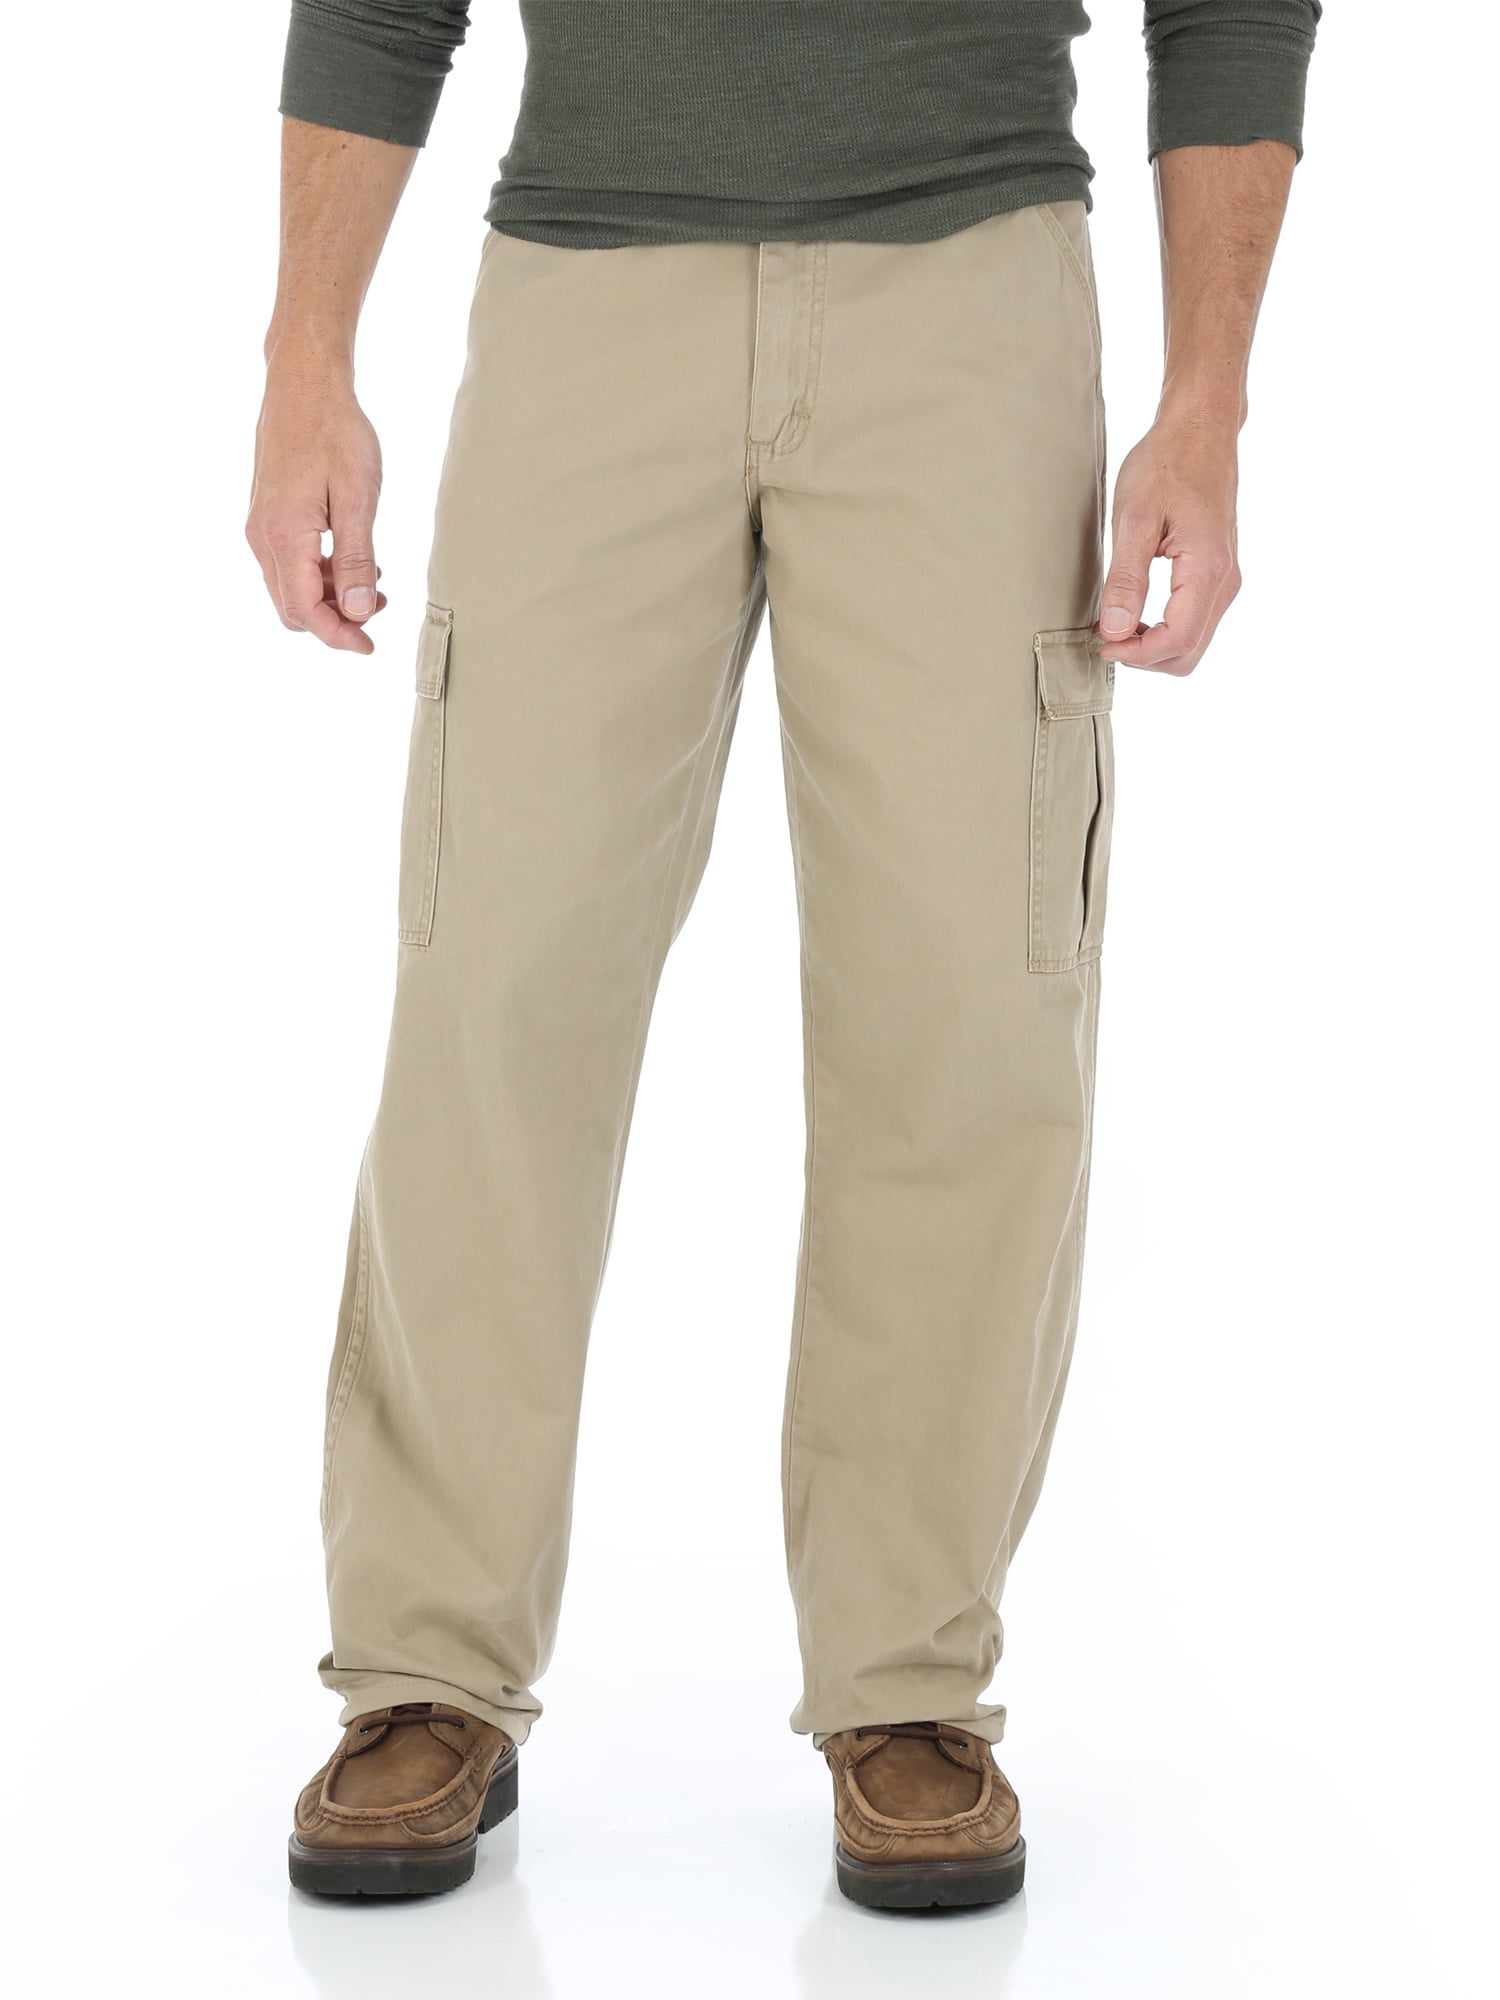 Wrangler - Wrangler Tall Men's Legacy Cargo Pants - Walmart.com ...